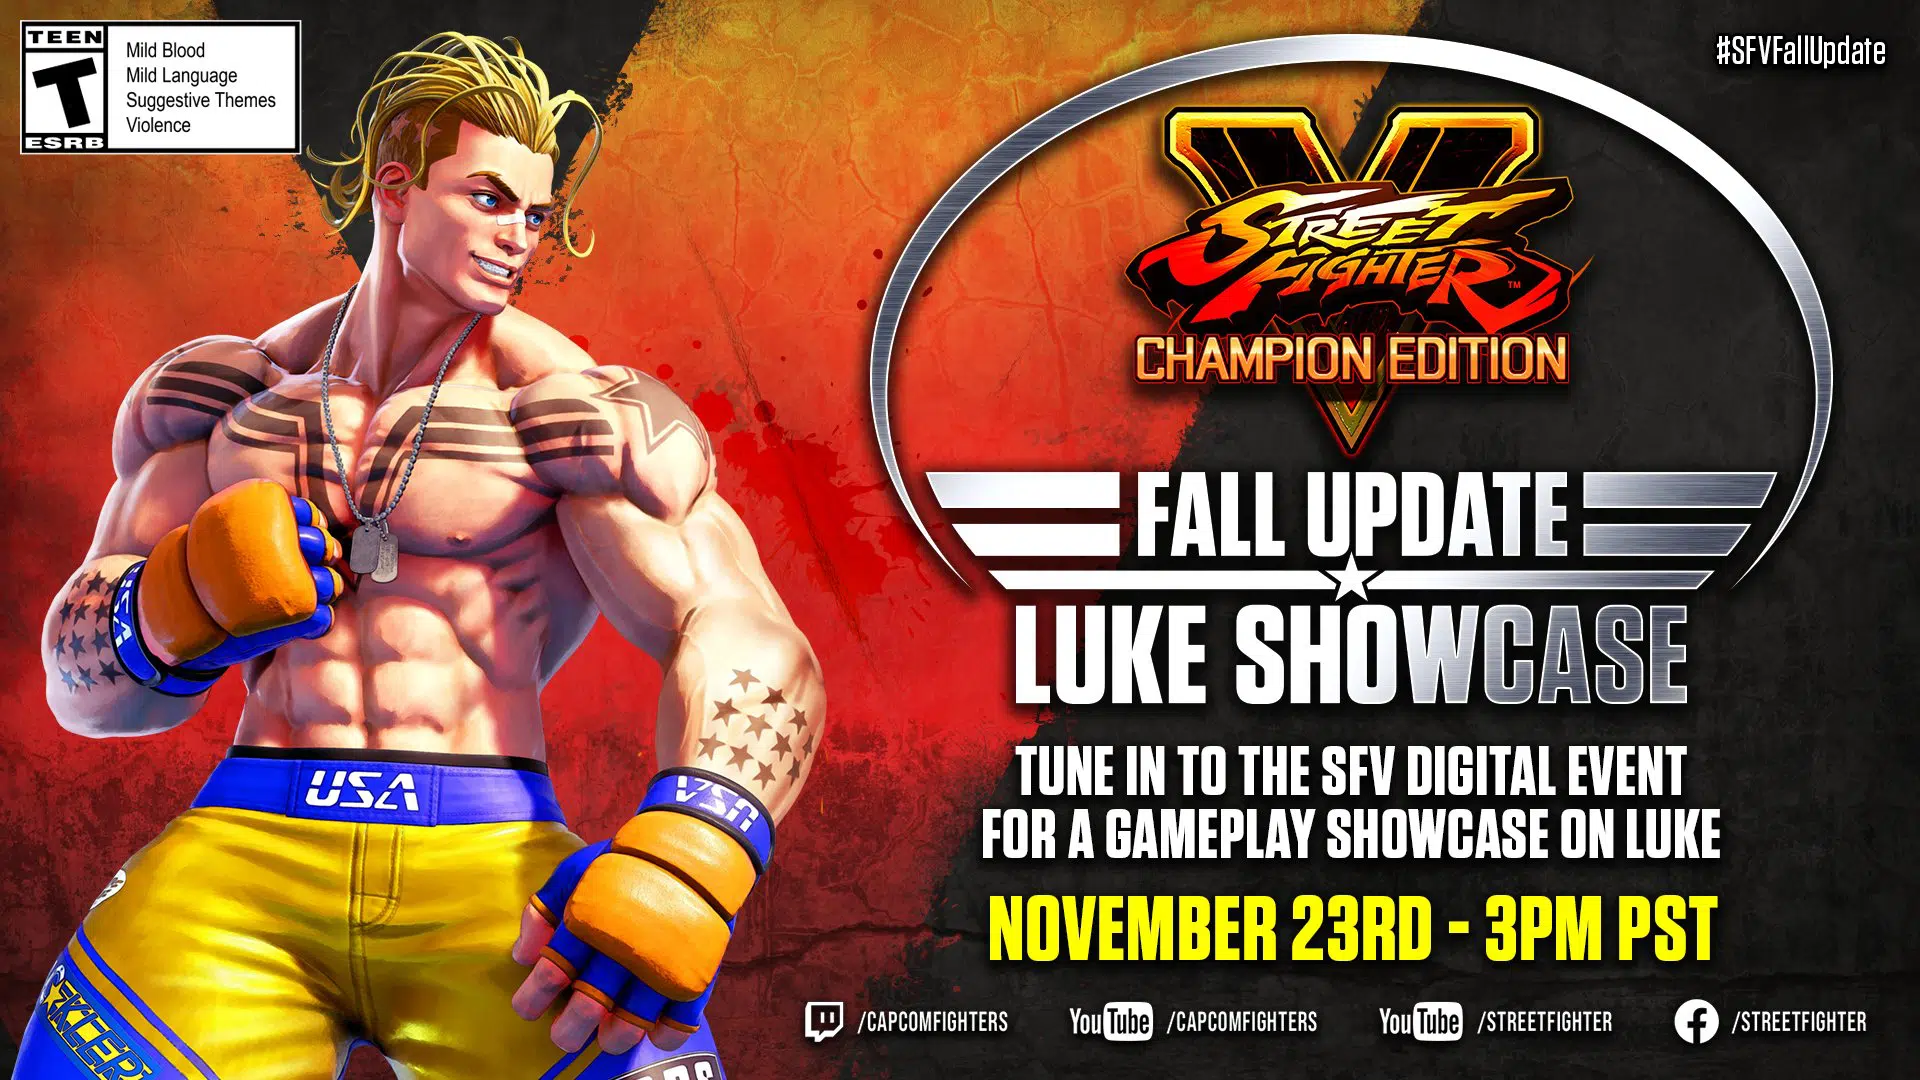 Street Fighter 5 Fall Update Livestream